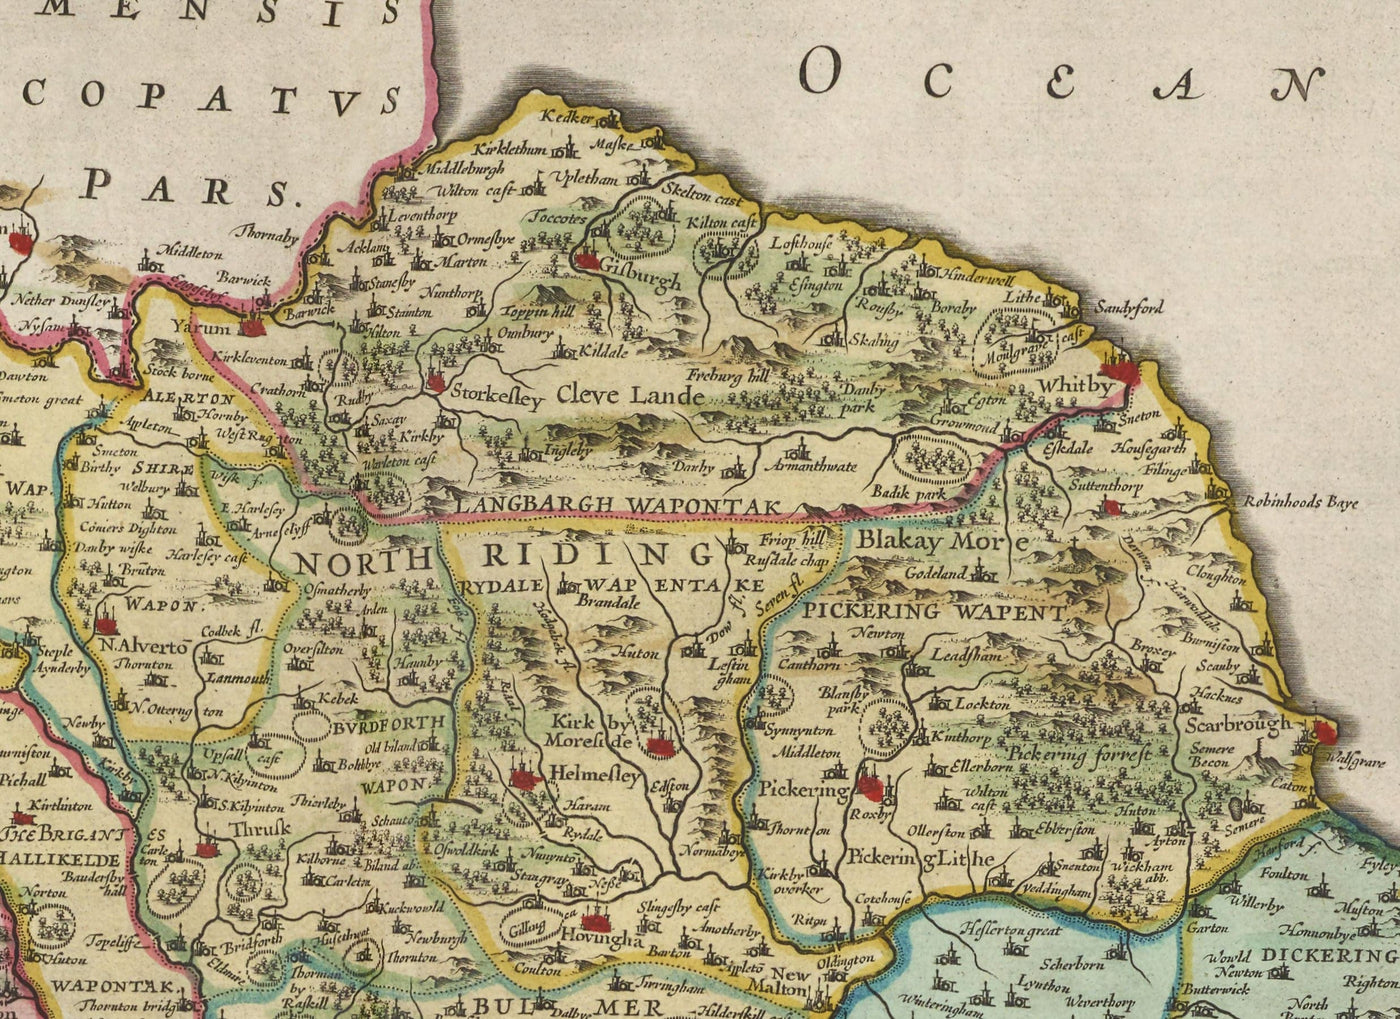 Old Map of Yorkshire in 1654 by Joan Blaeu - York, Bradford, Sheffield, Leeds, Middlesbrough, Harrogate